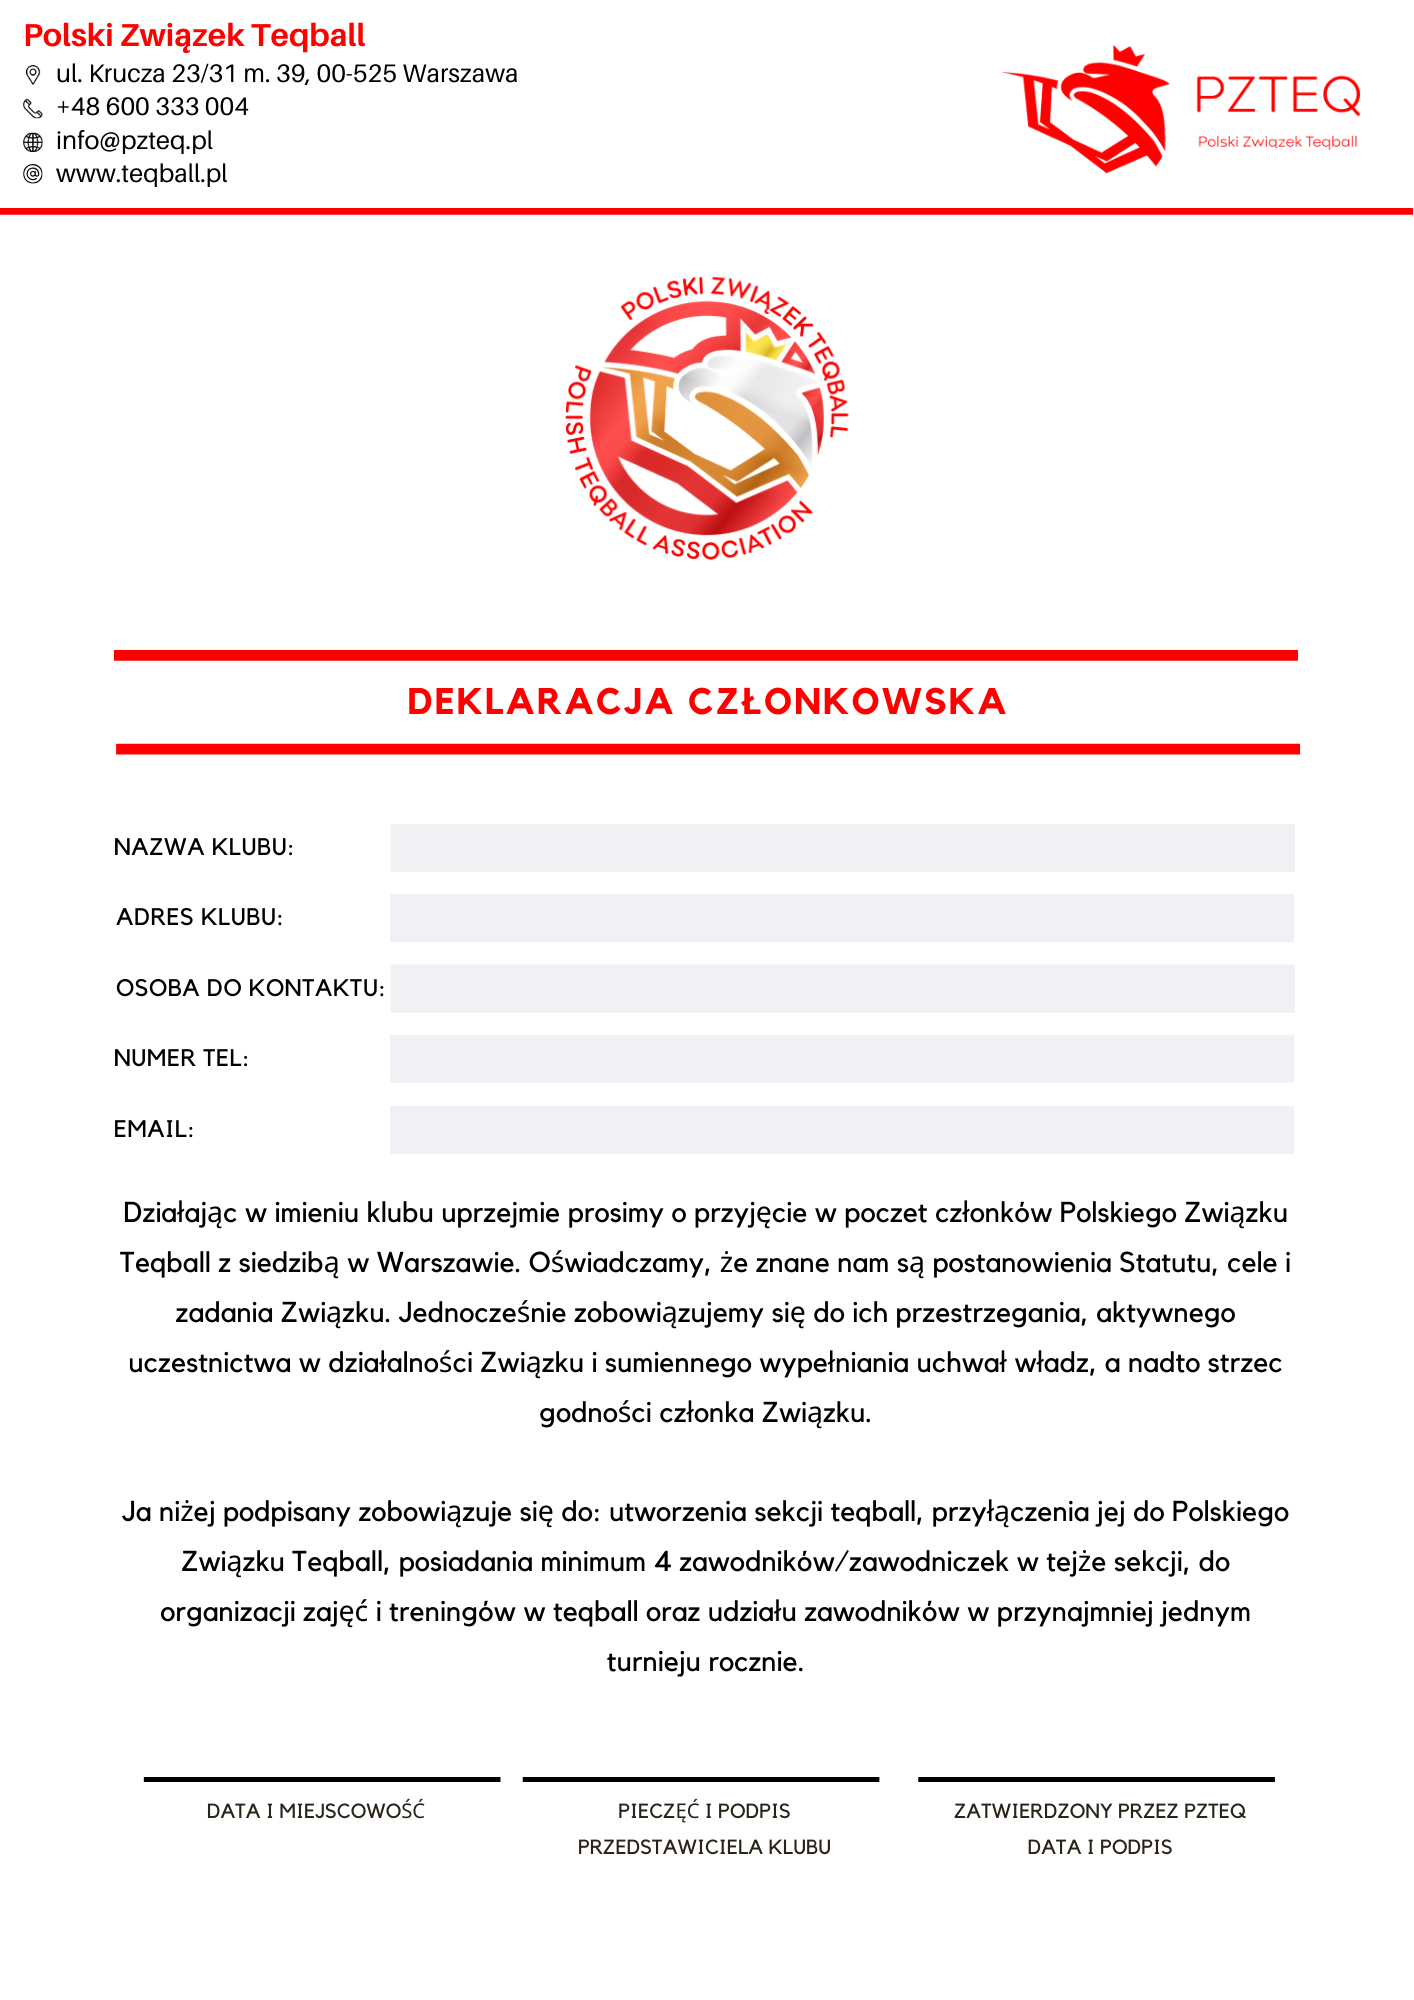 Deklaracja Czonkowska